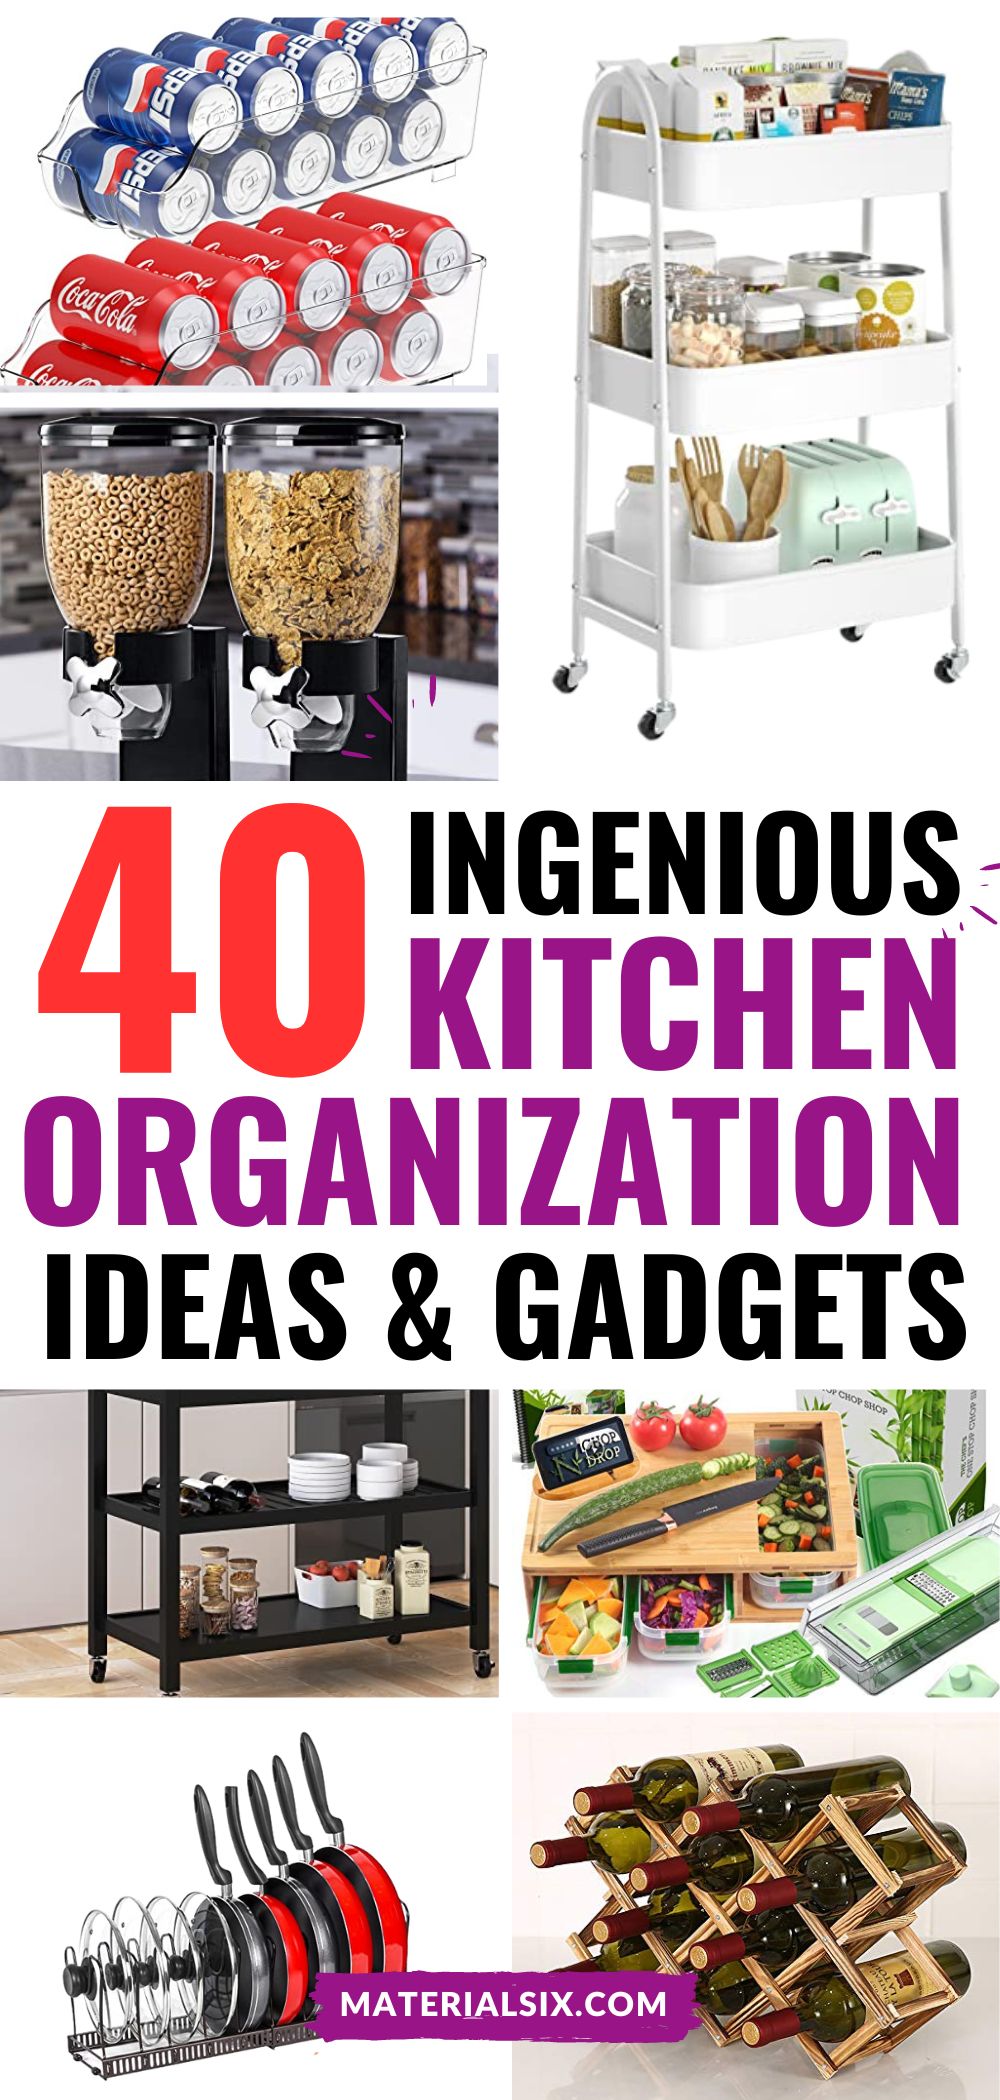 Kitchen Organization Ideas and Gadgets